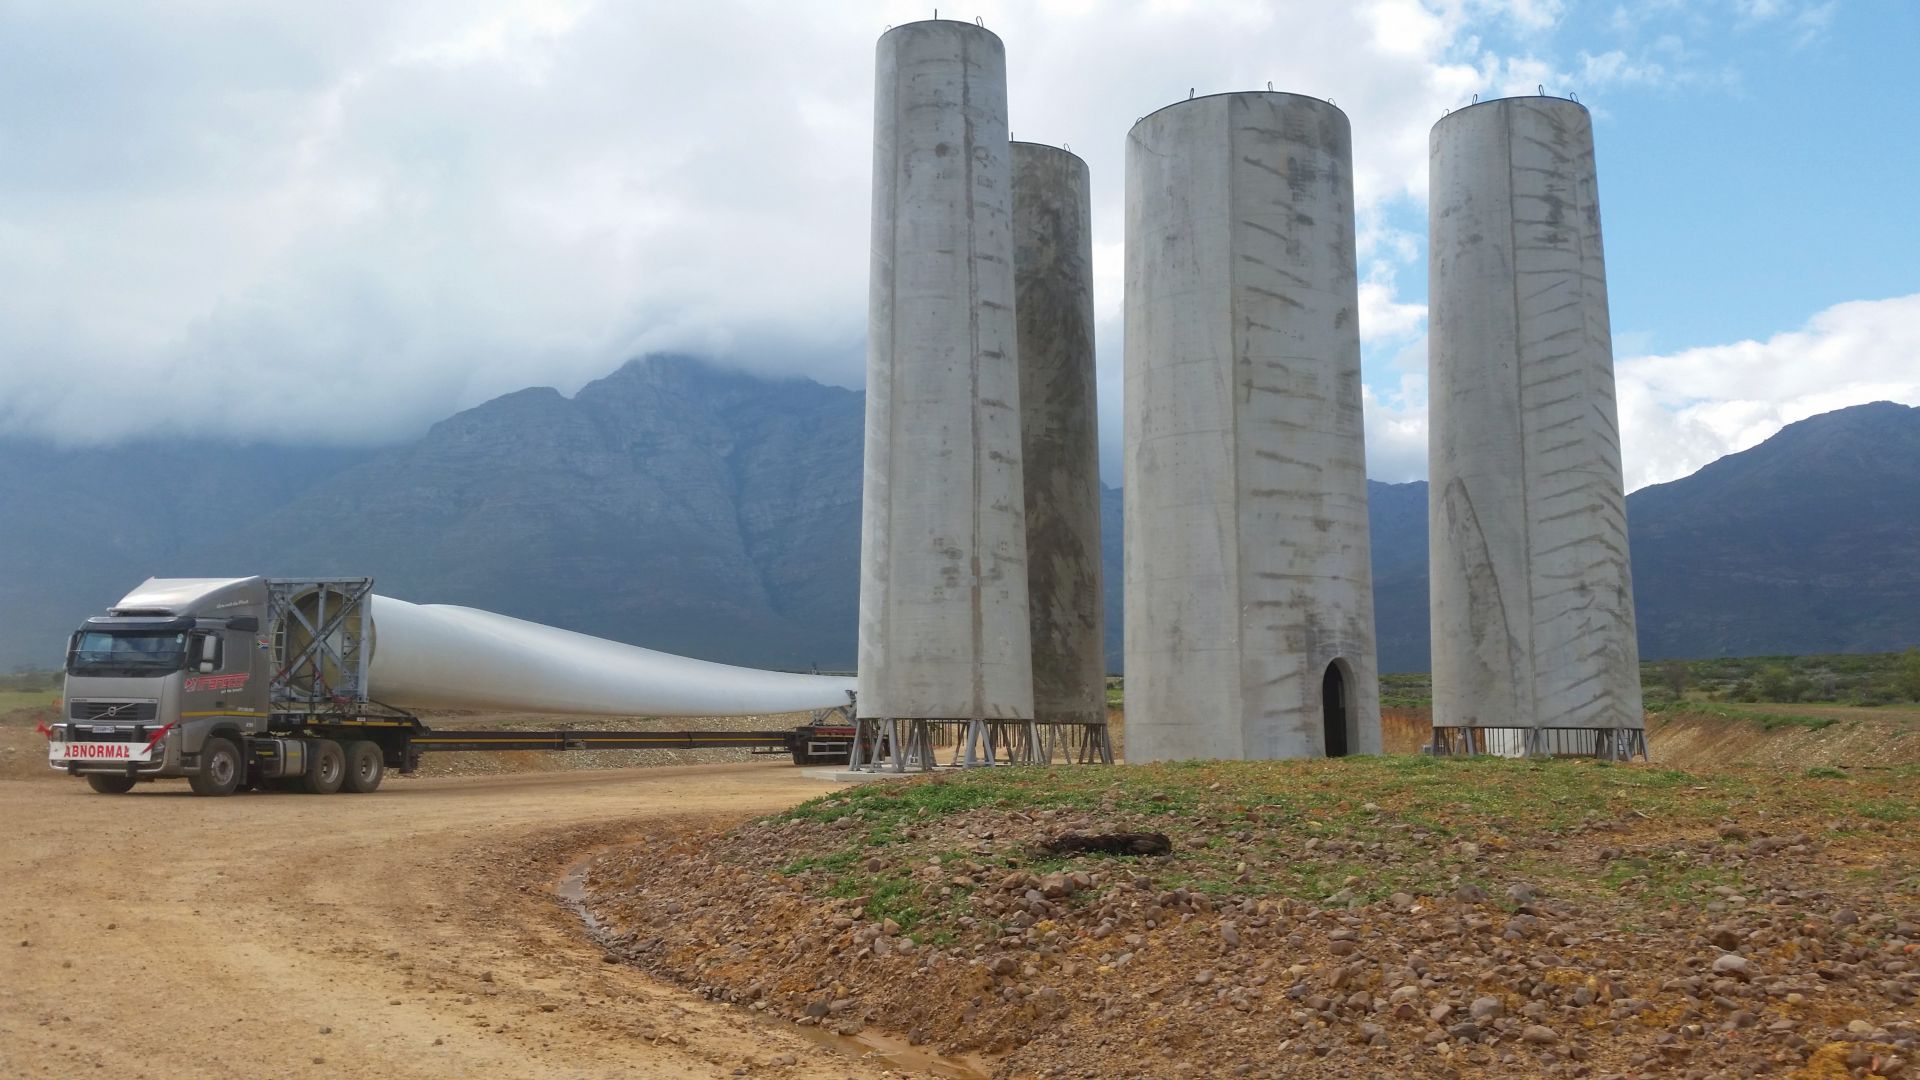 Concrete Towers - Wind Farm